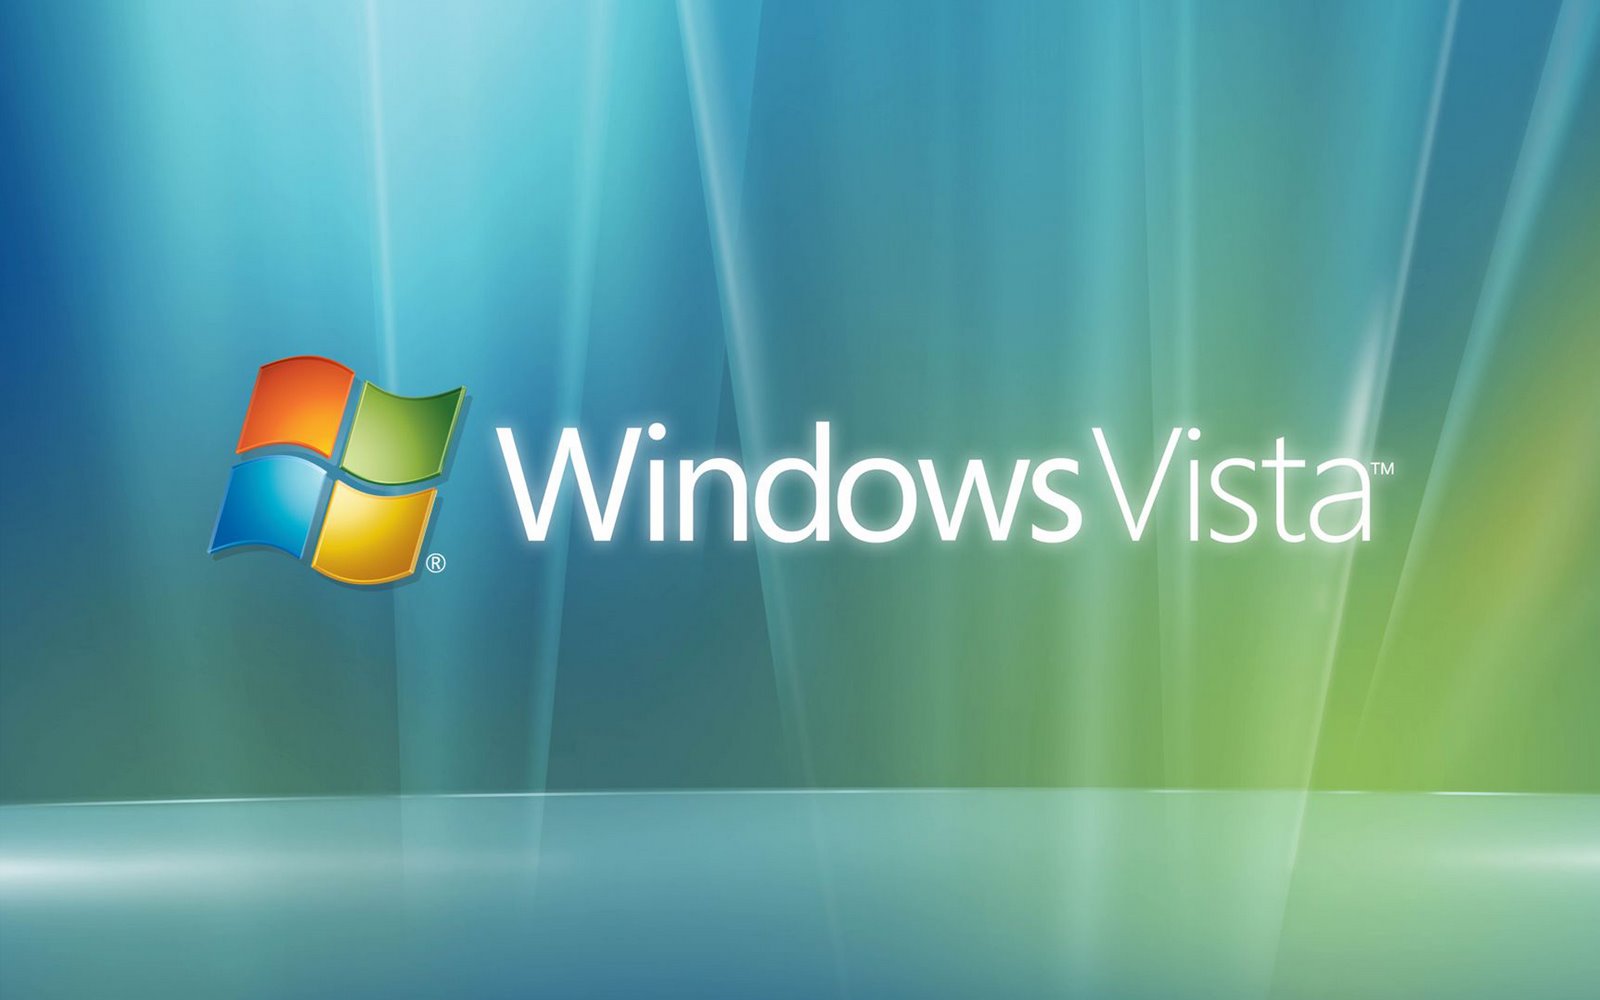 Función de Windows Vista fue concebida para causar molestia